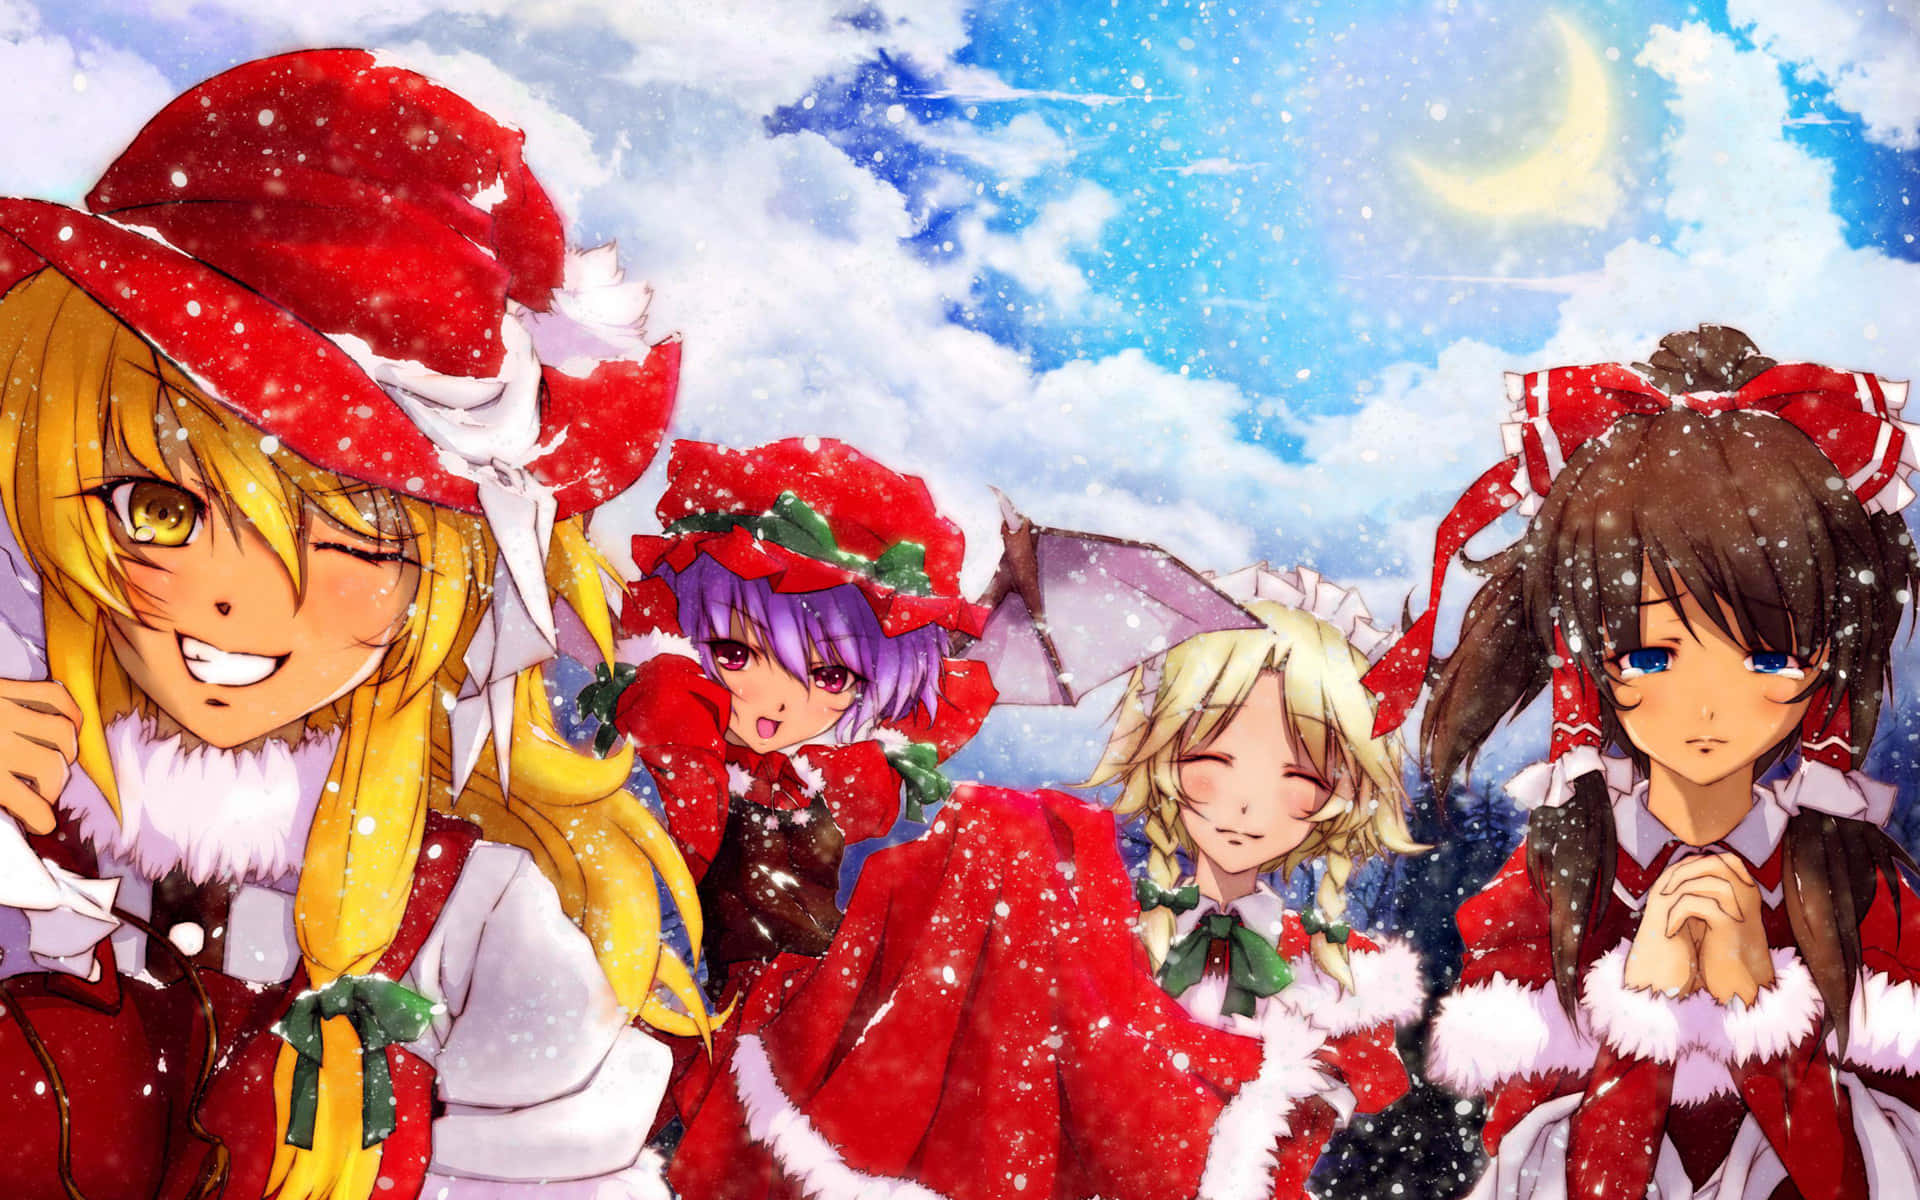 Firahelgerna Med Denna Festliga Anime Julbakgrund!